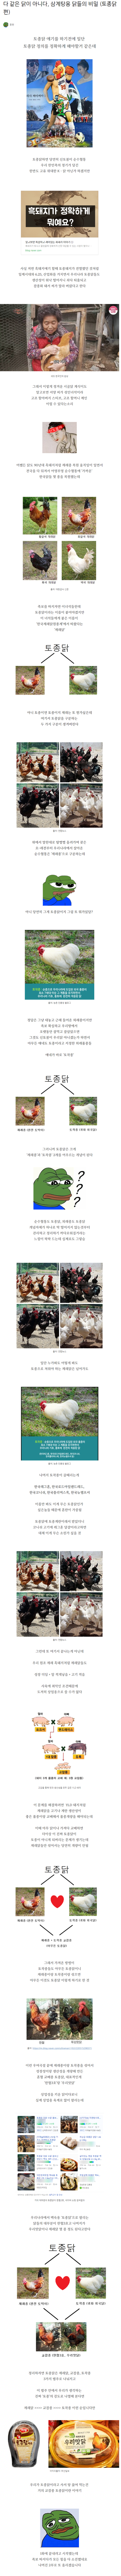 Secrets of Chicken for Samgyetang (Native Chicken)